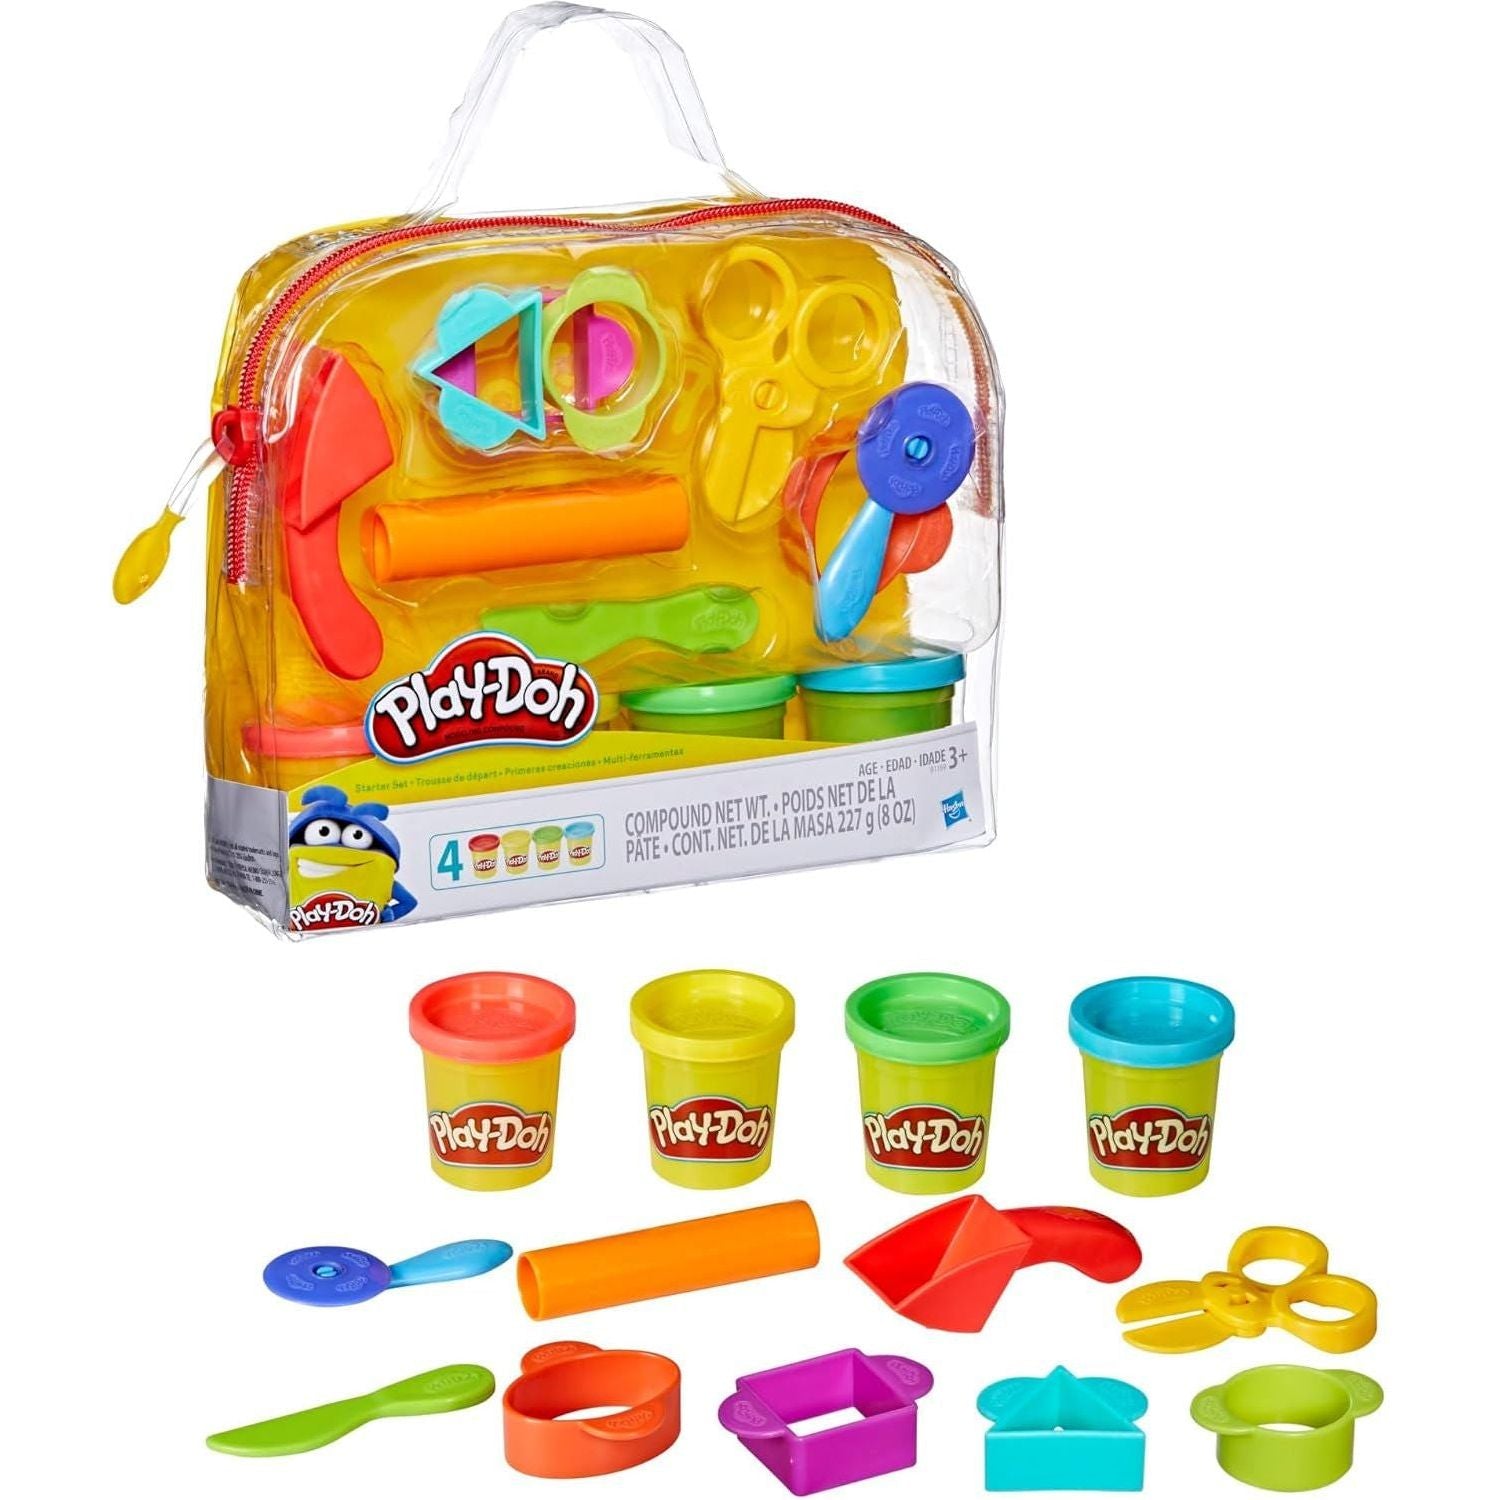 Play-doh Tools Starter Kit